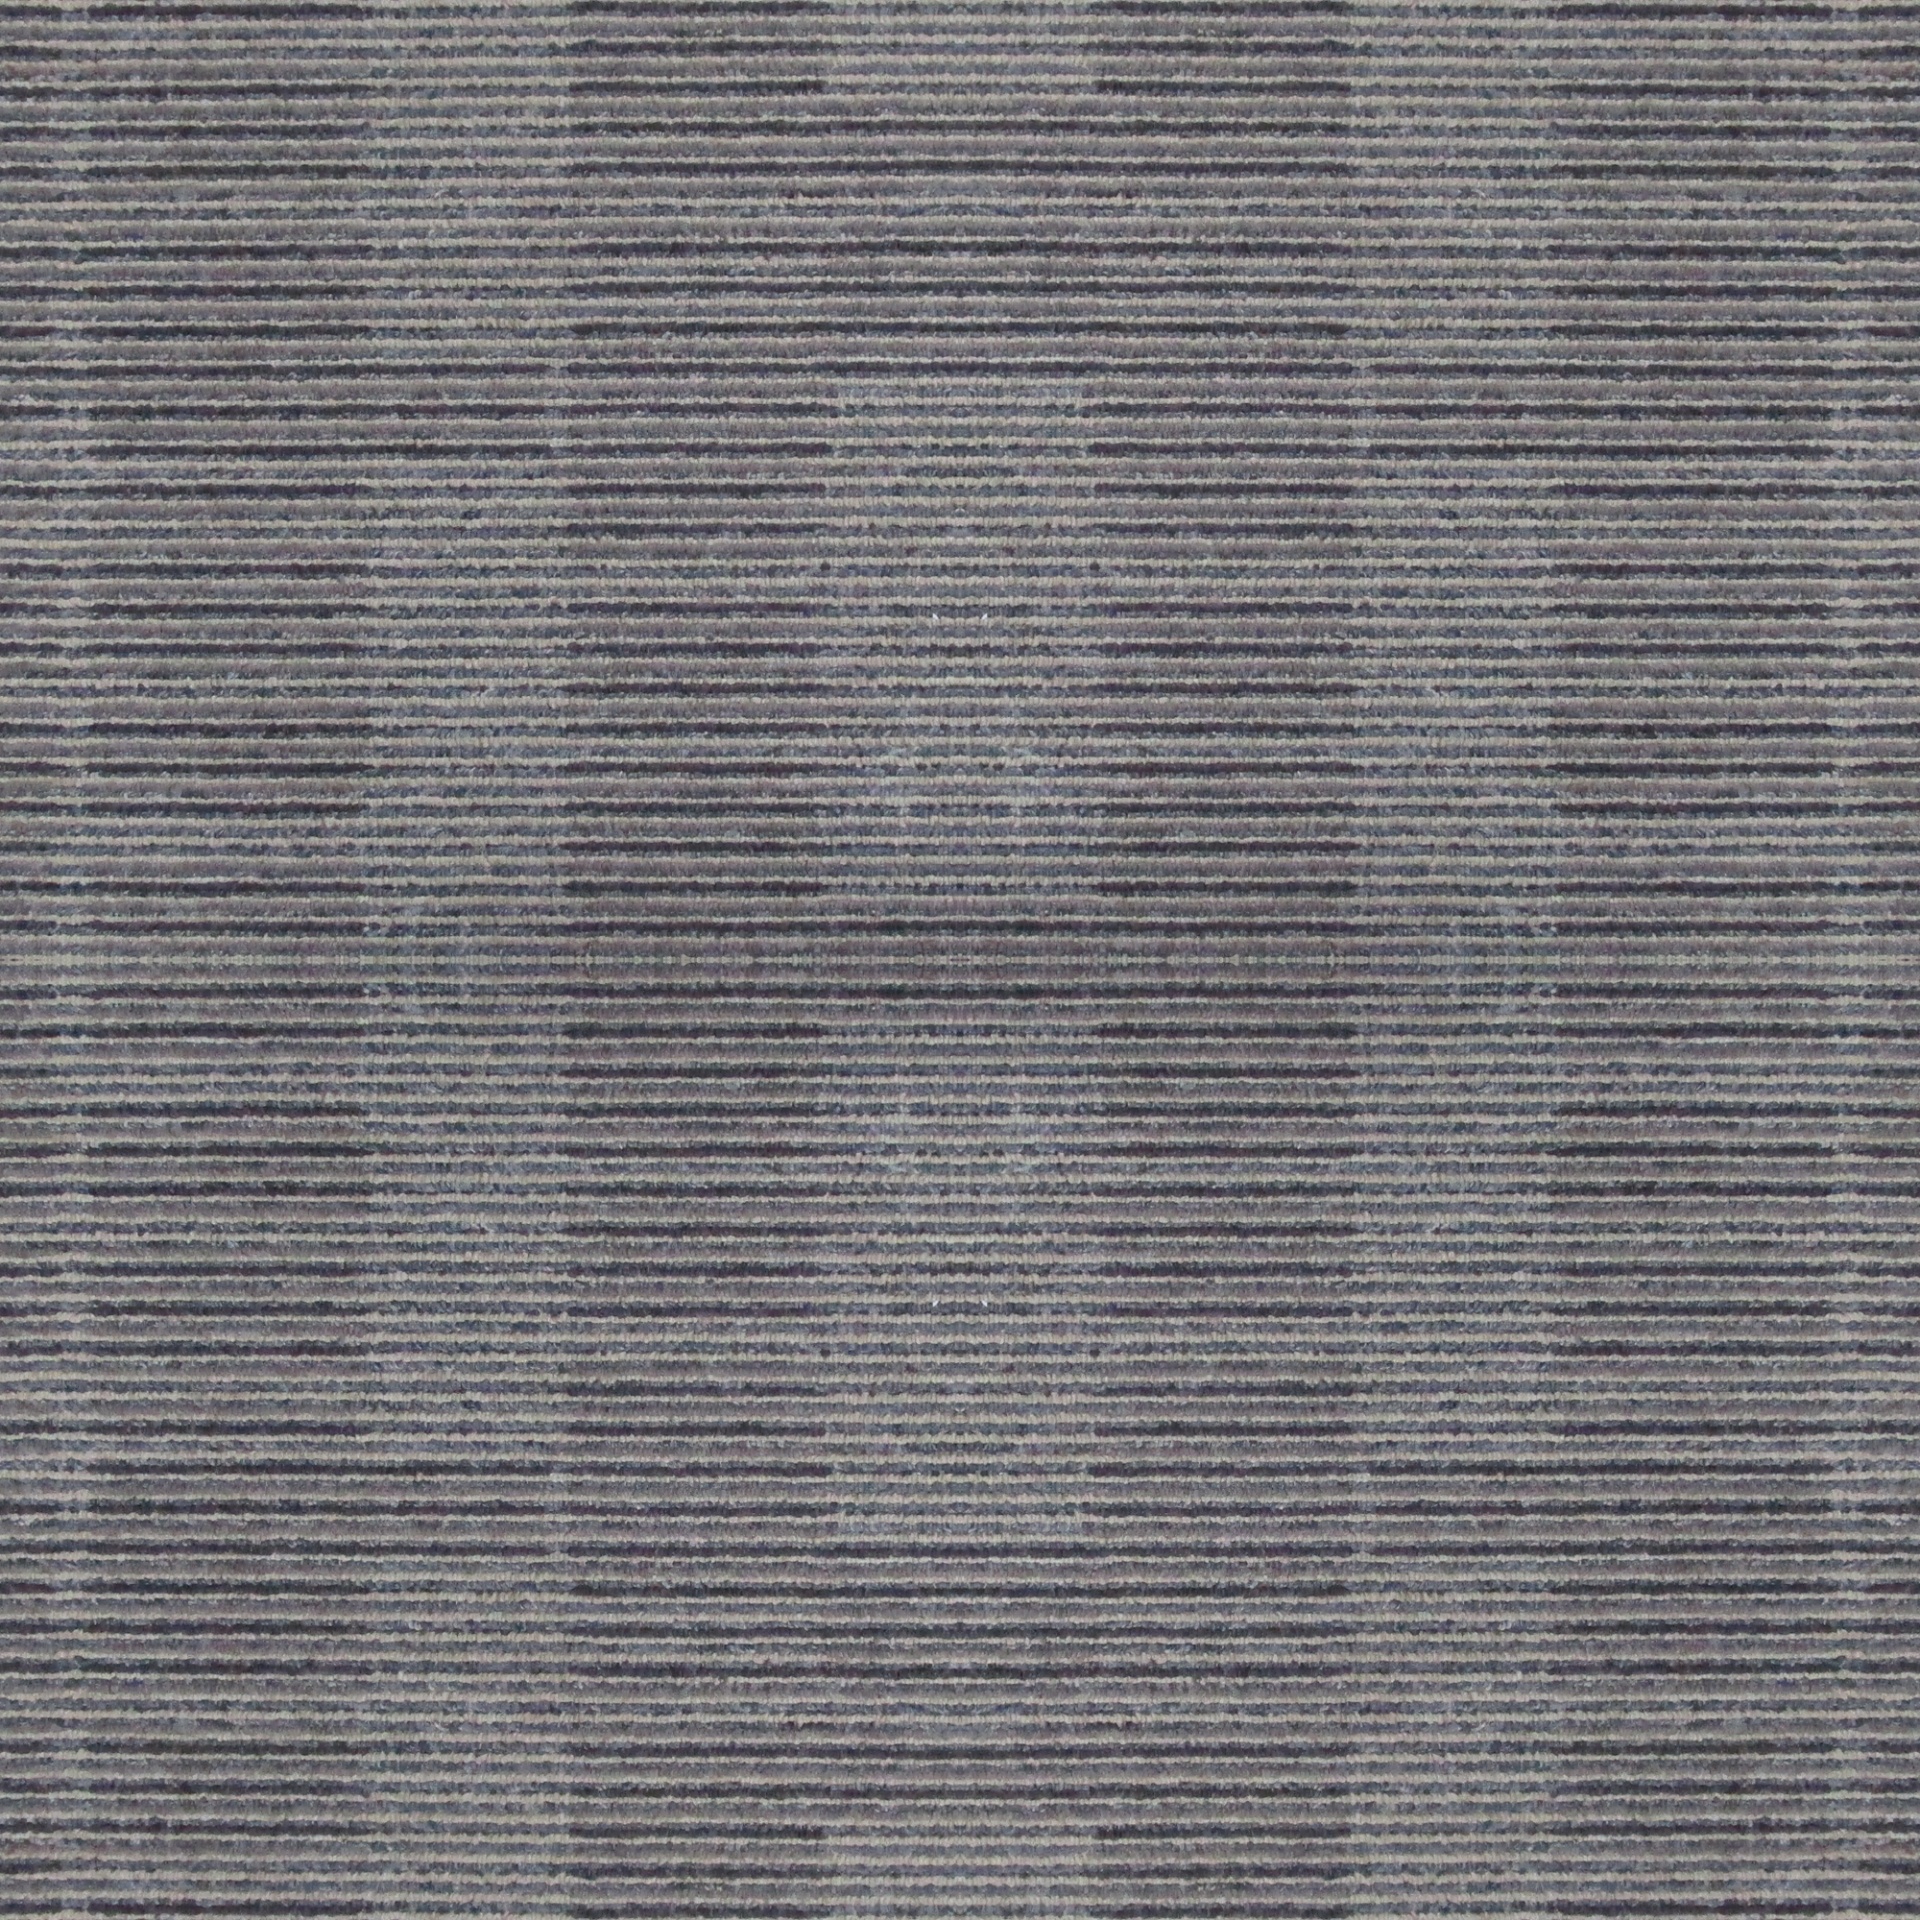 Grey Mat Pattern